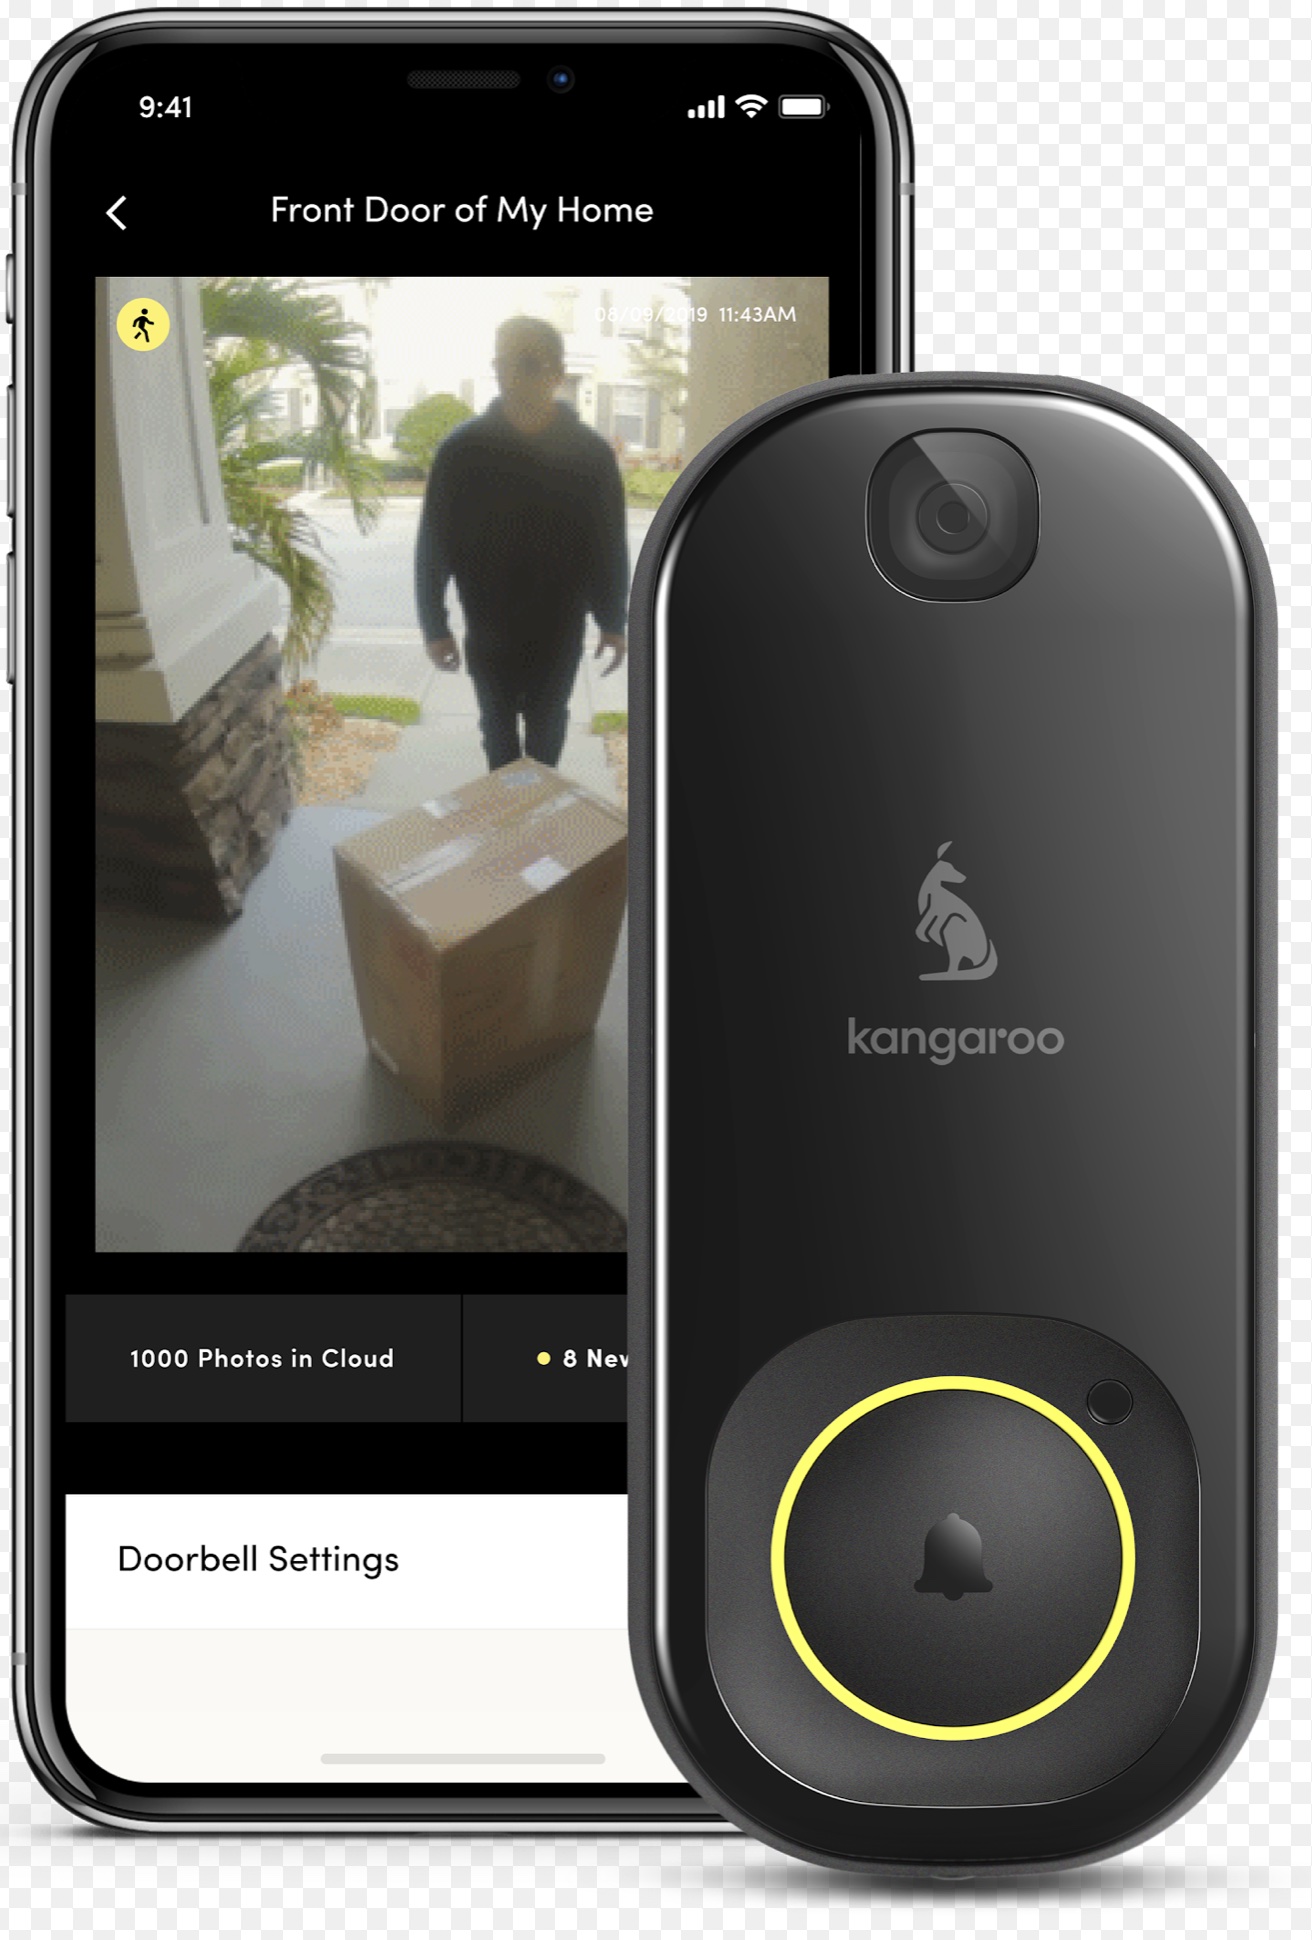 Kangaroo launches Doorbell Camera for home security - MacTech.com